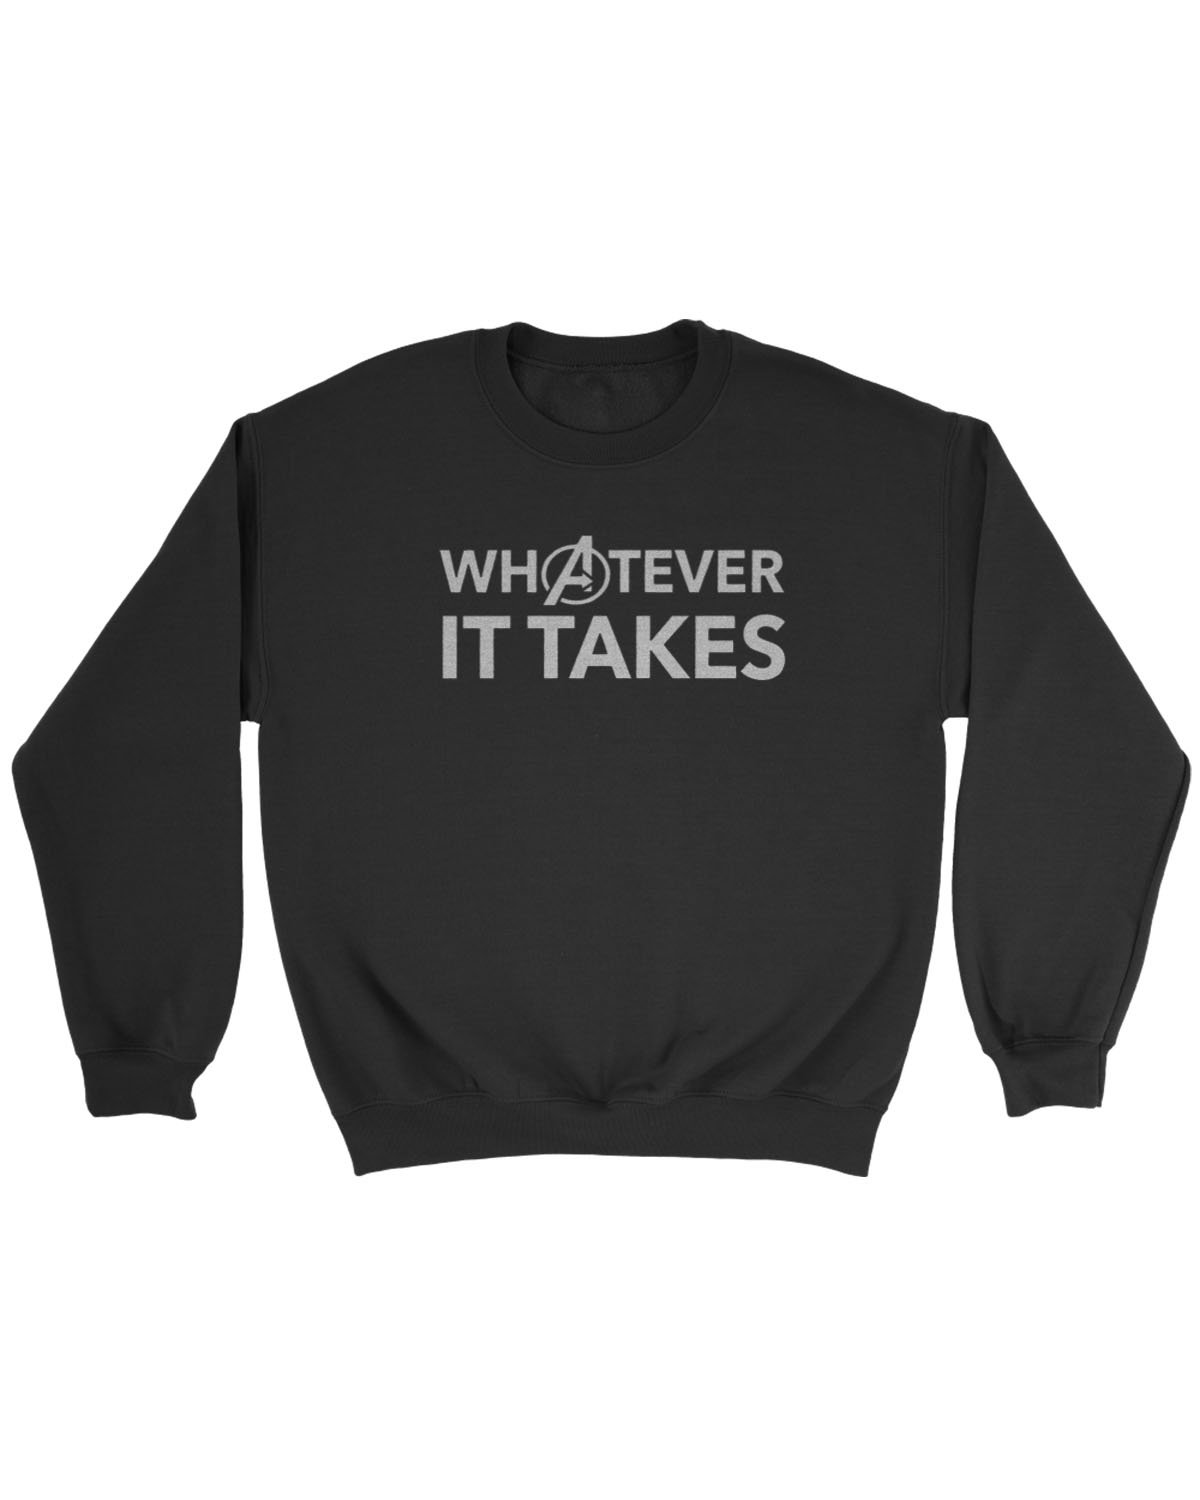 Whatever It Takes Avengers Endgame Sweatshirt